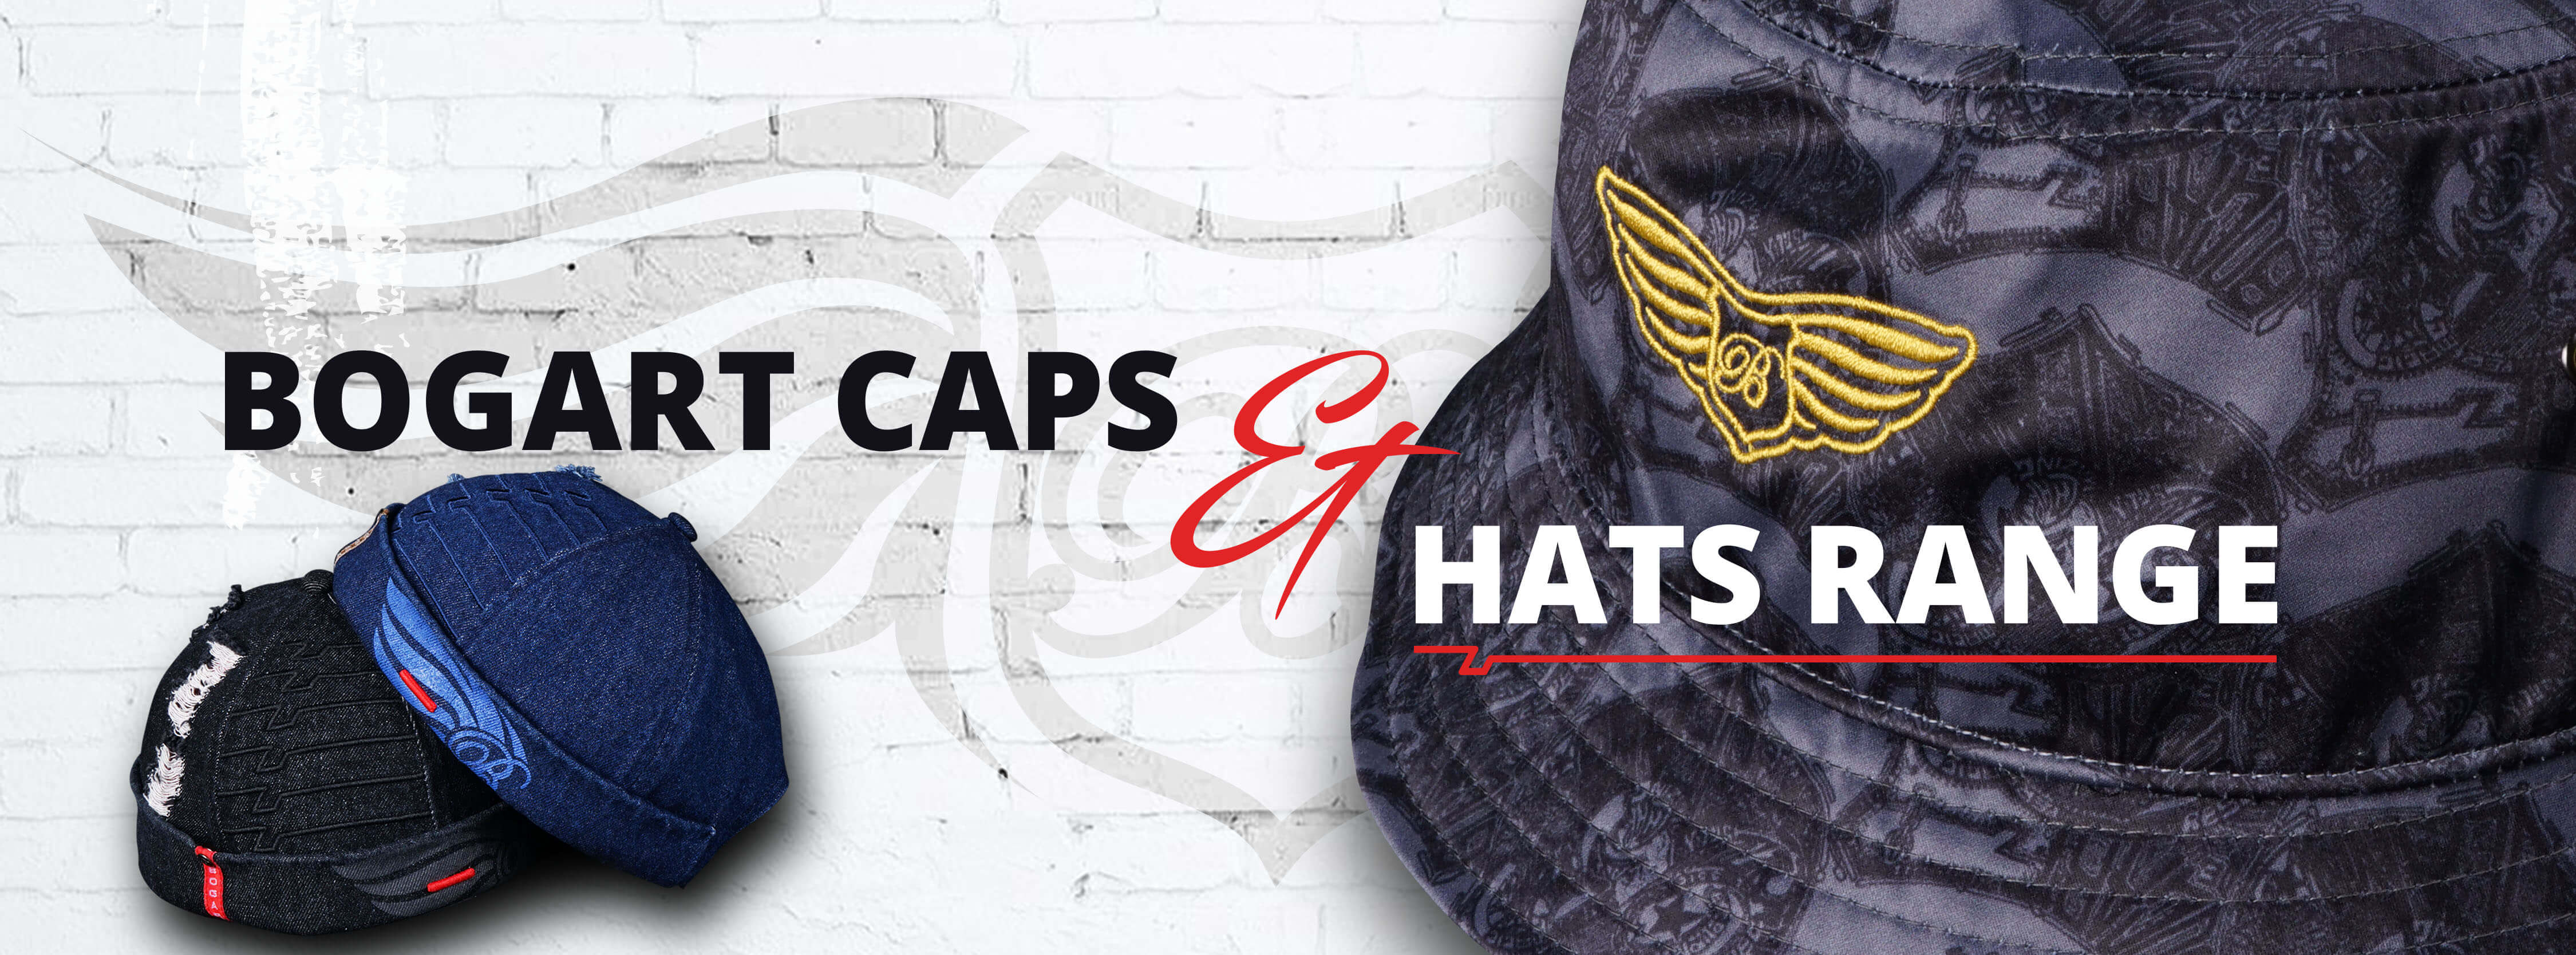 Bogart Caps & Hats Banner Image